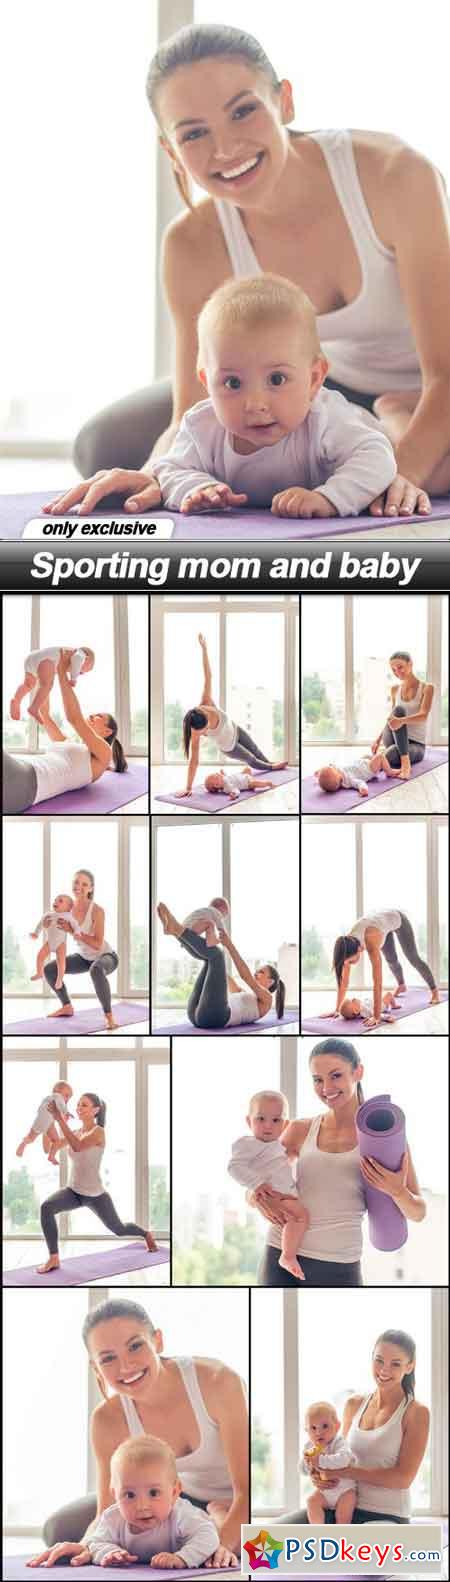 Sporting mom and baby - 10 UHQ JPEG